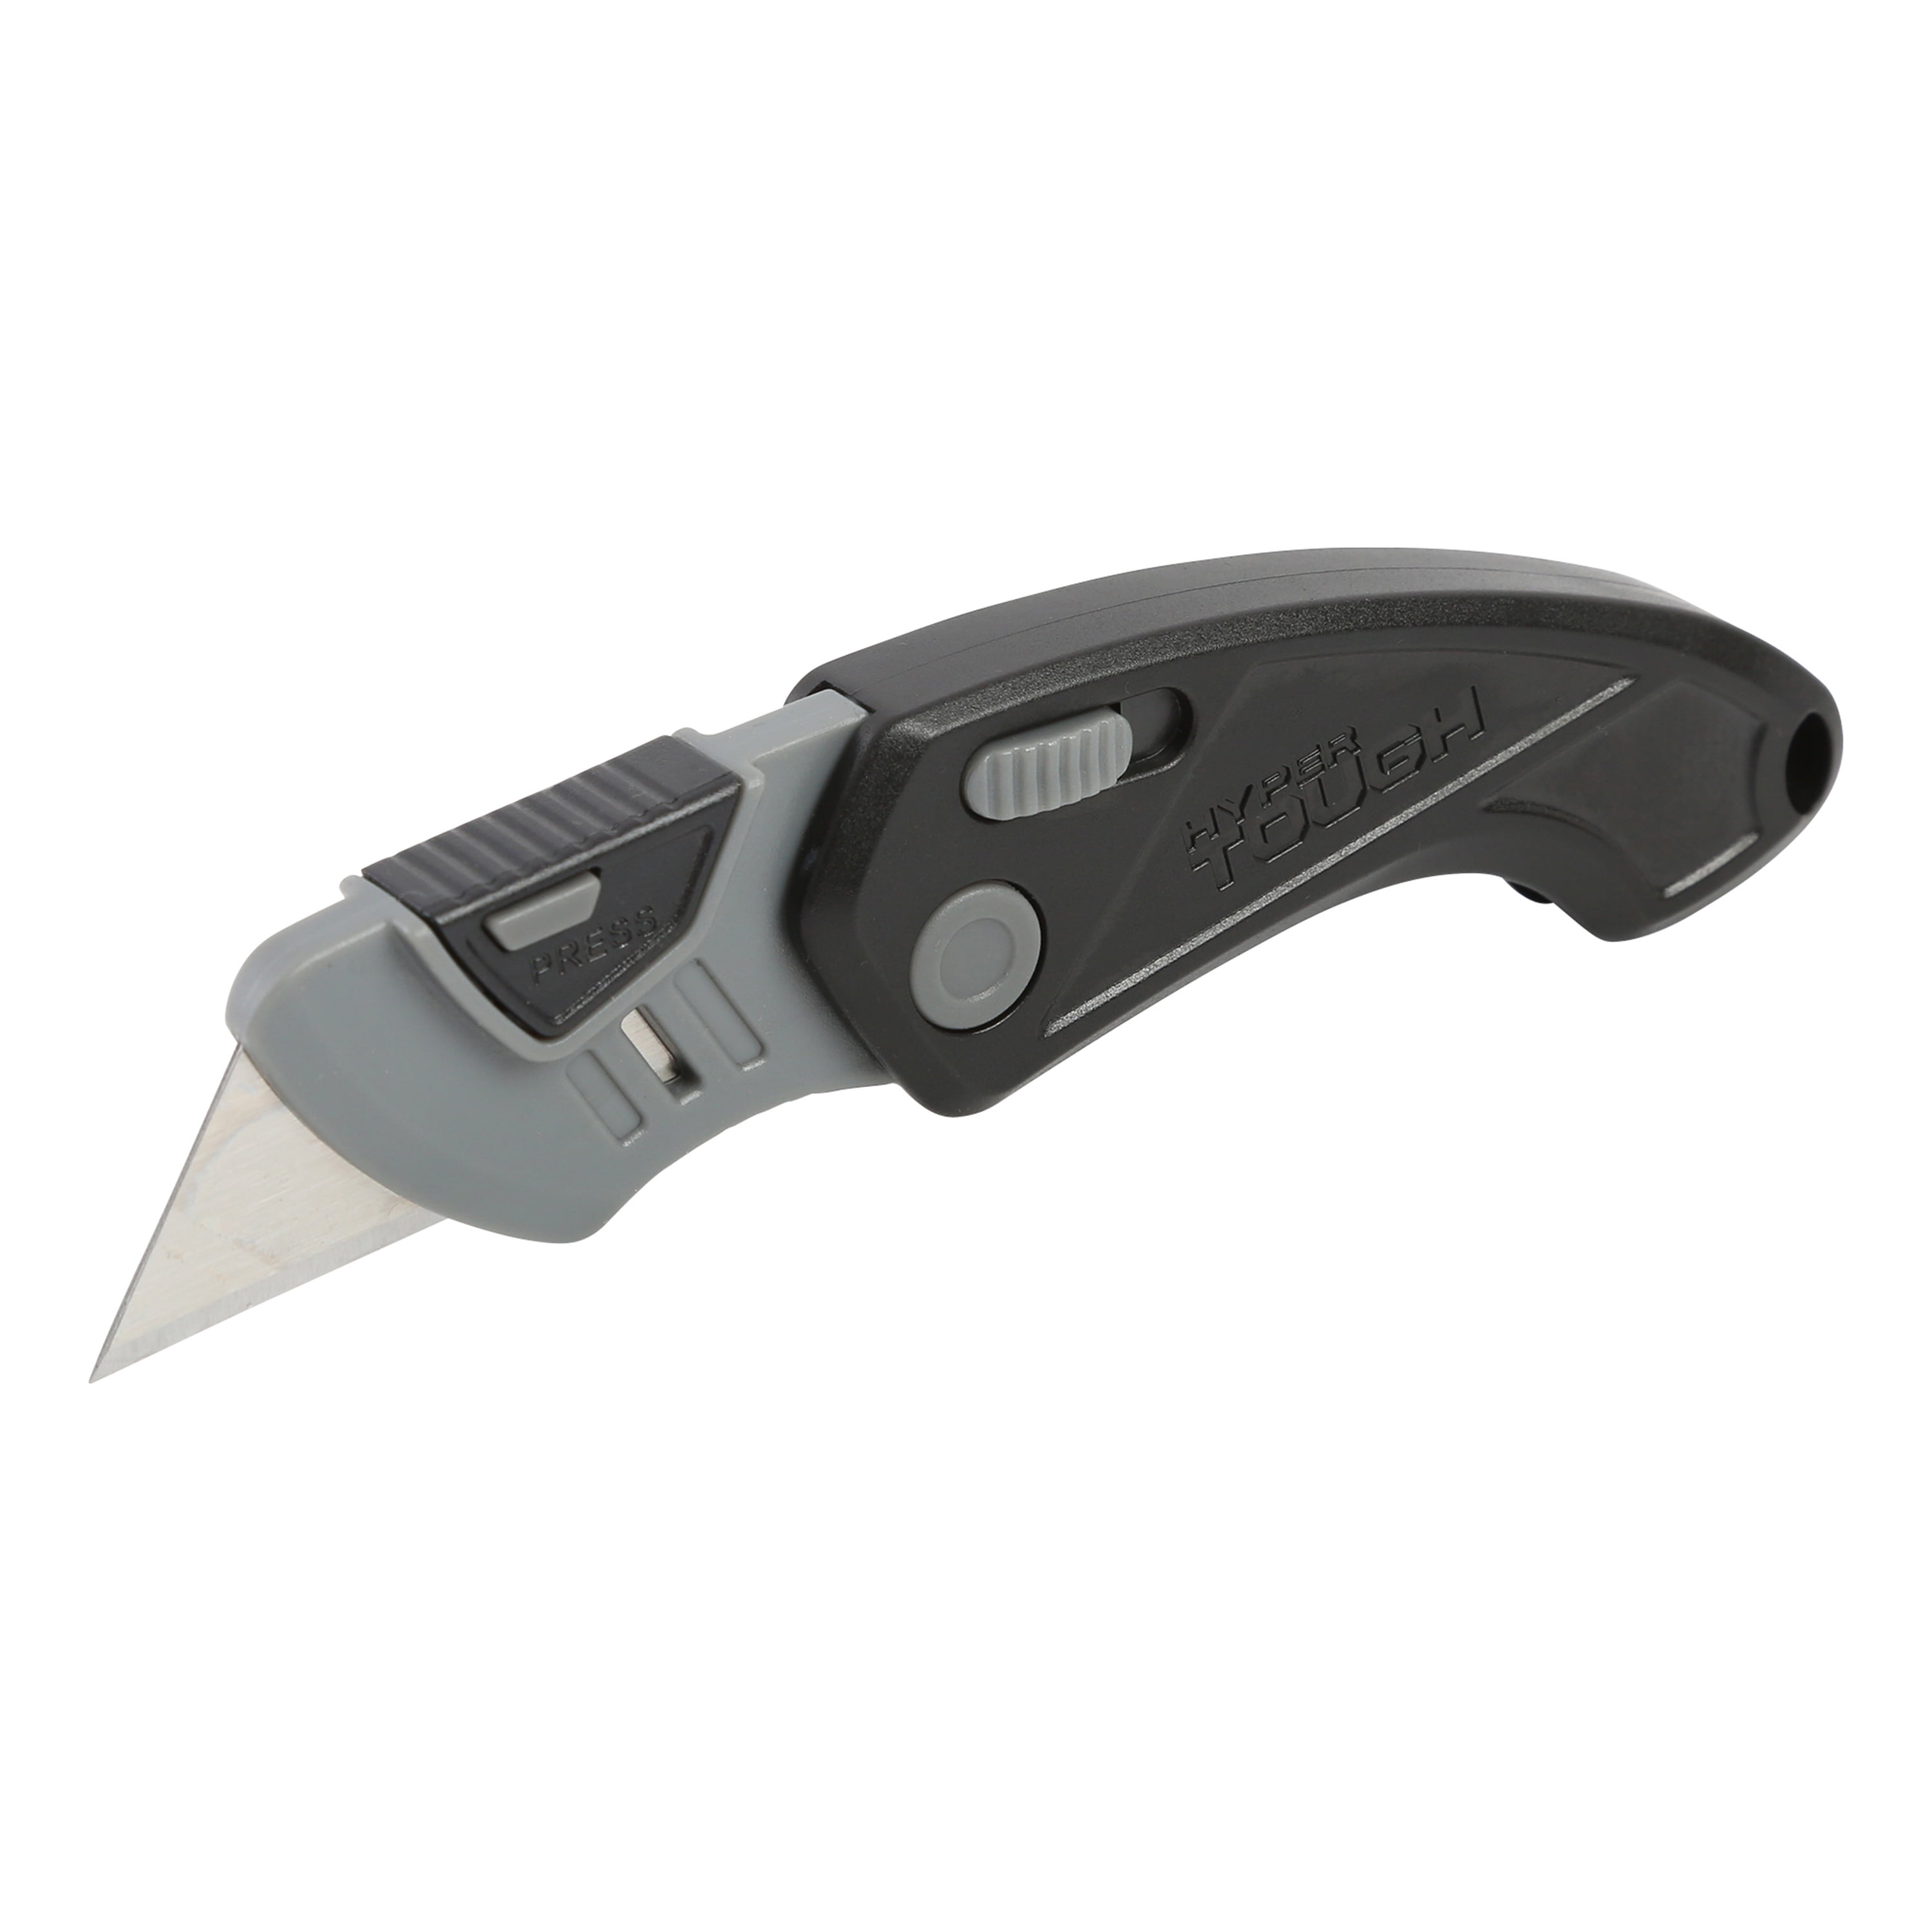 Hyper Tough Plastic Folding Utility Knife, Blade Included, Model 6713V